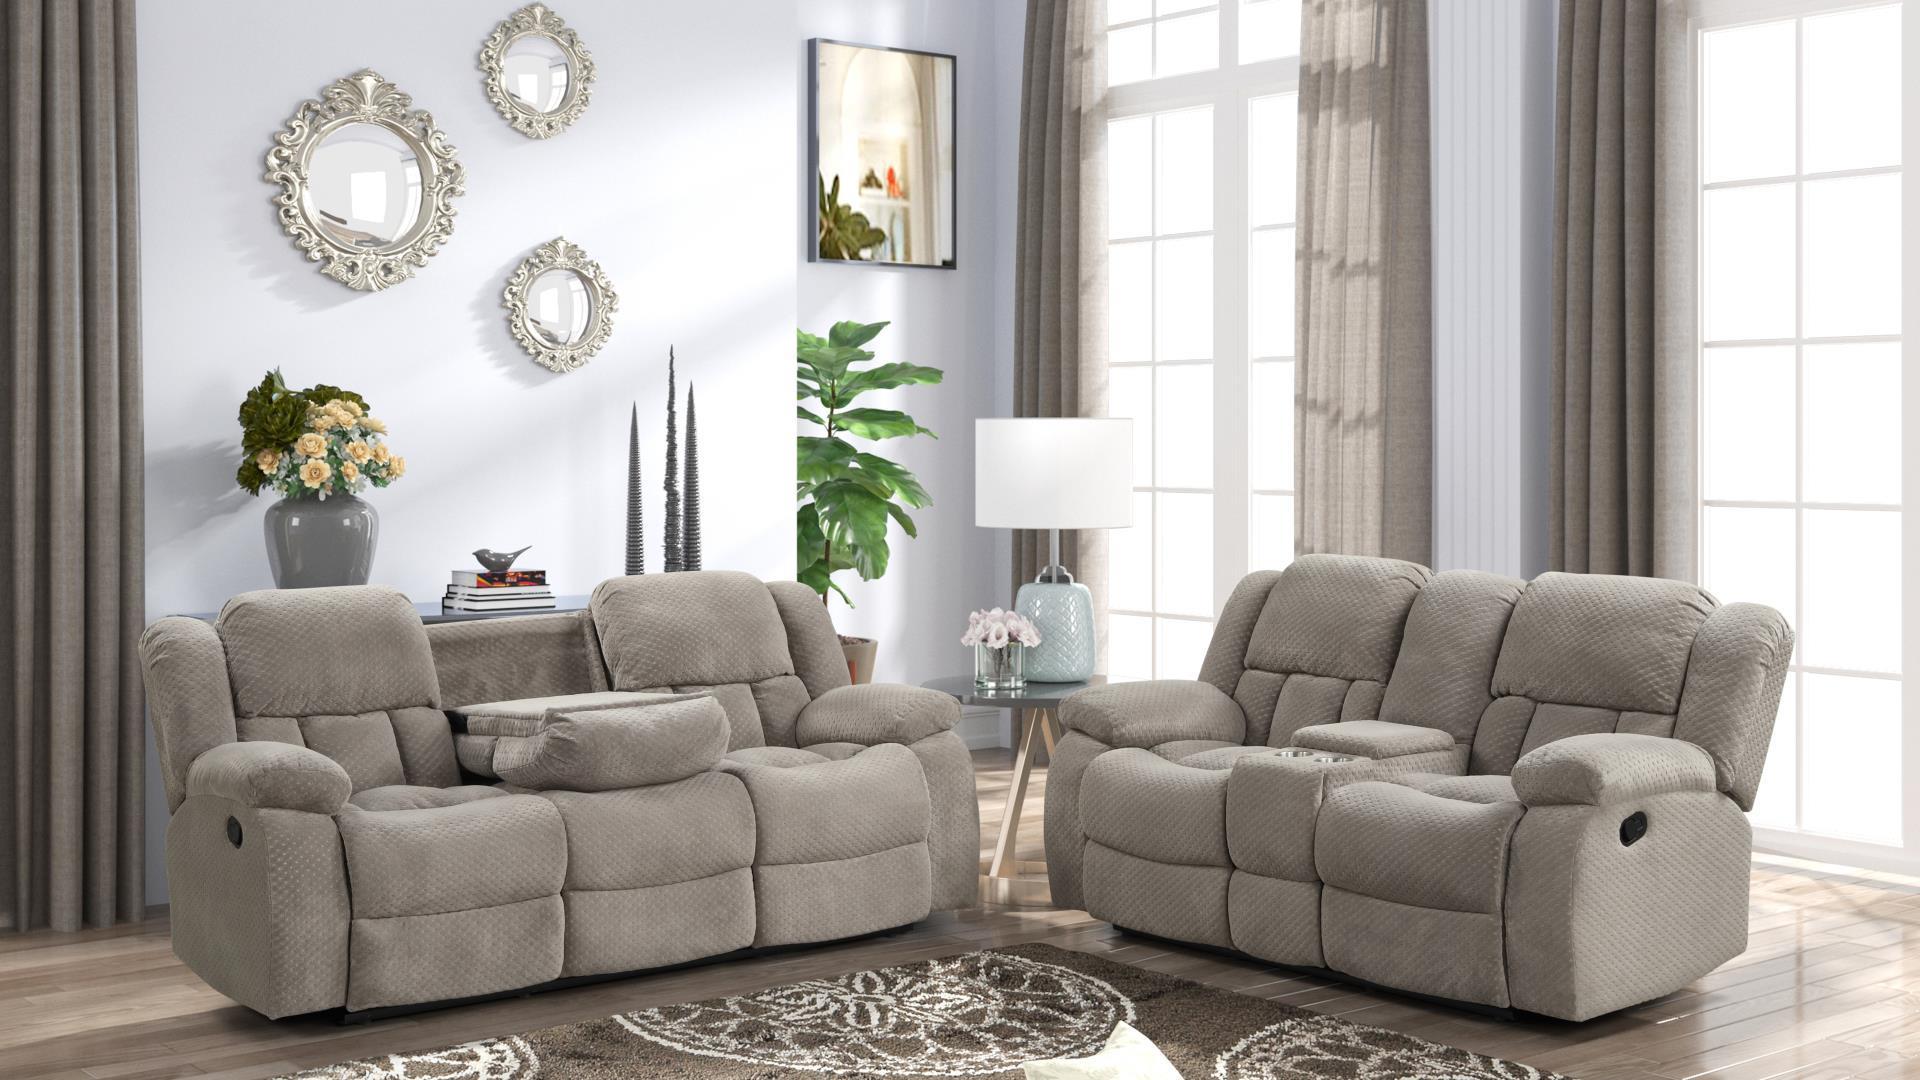 Galaxy Home Furniture ARMADA Ice Gray Recliner Sofa Set